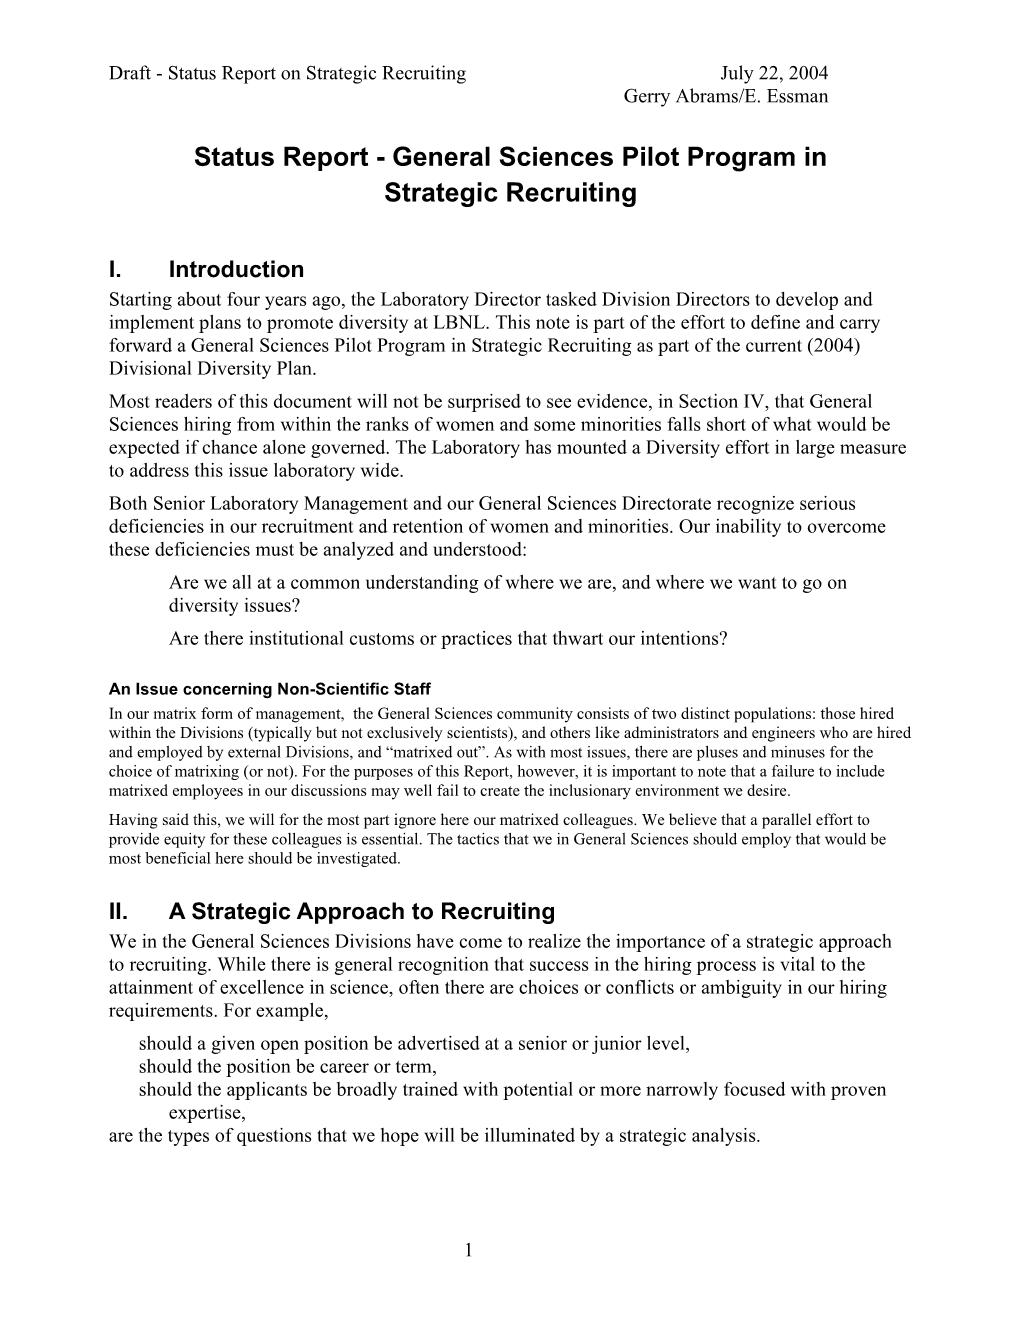 Status Report - General Sciences Pilot Program in Strategic Recruiting